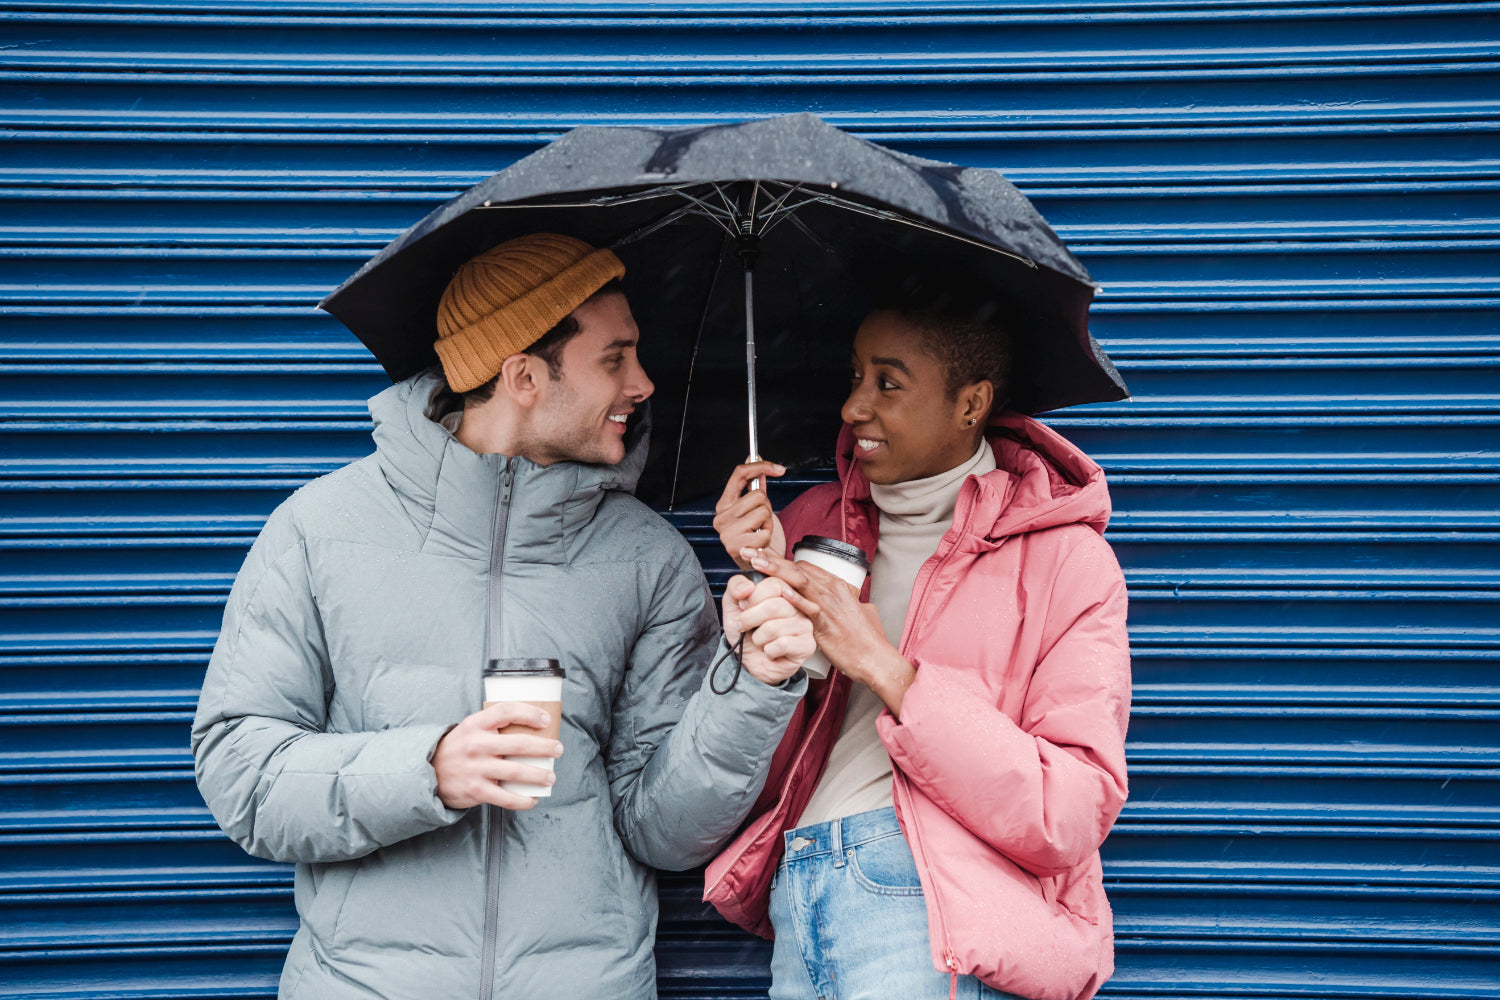 Two people enjoy coffee under an umbrella